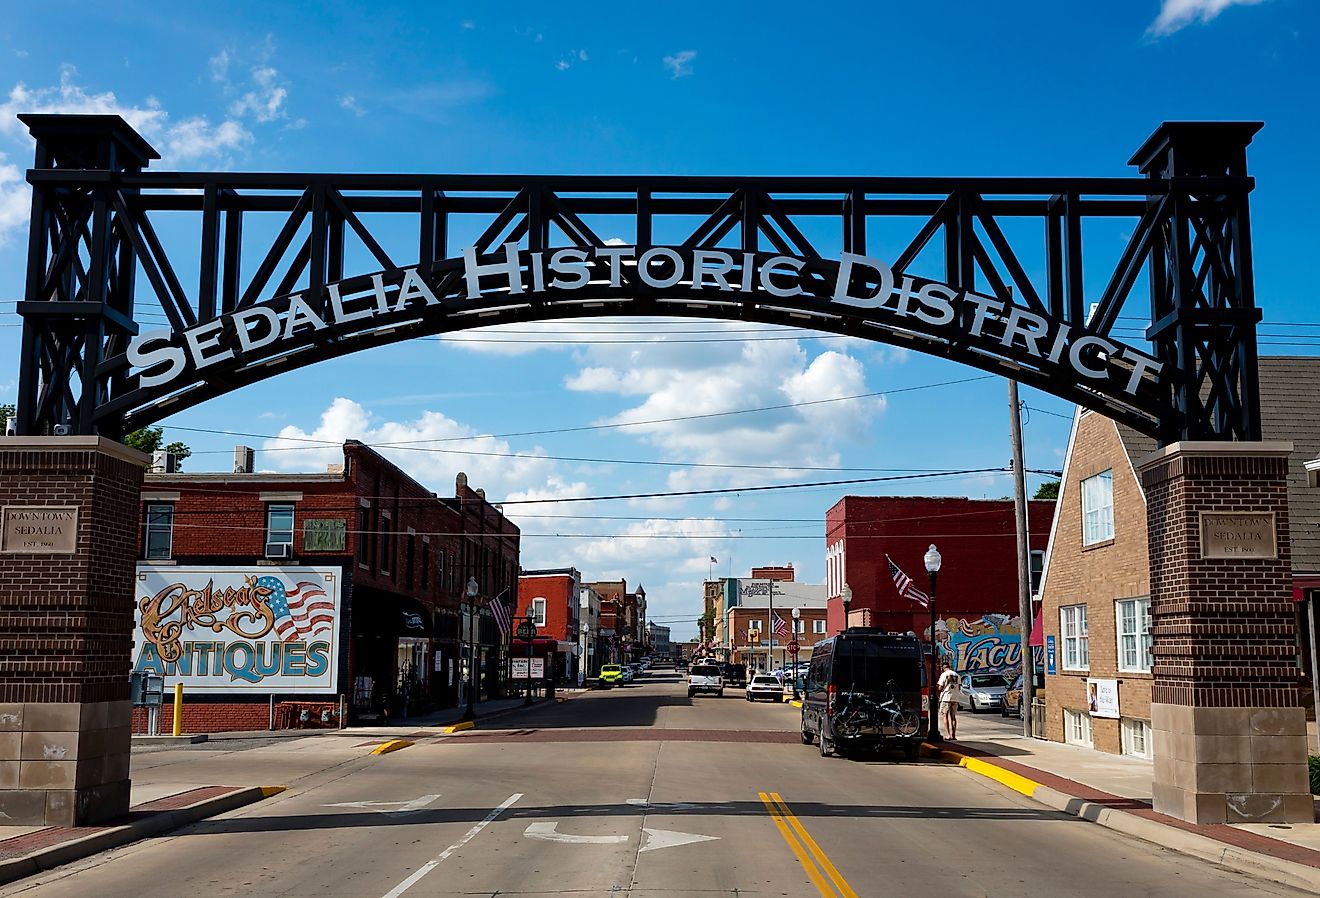 Sedalia Historic District view, in Sedalia, Missouri. Image credit Joseph Sohm via Shutterstock.